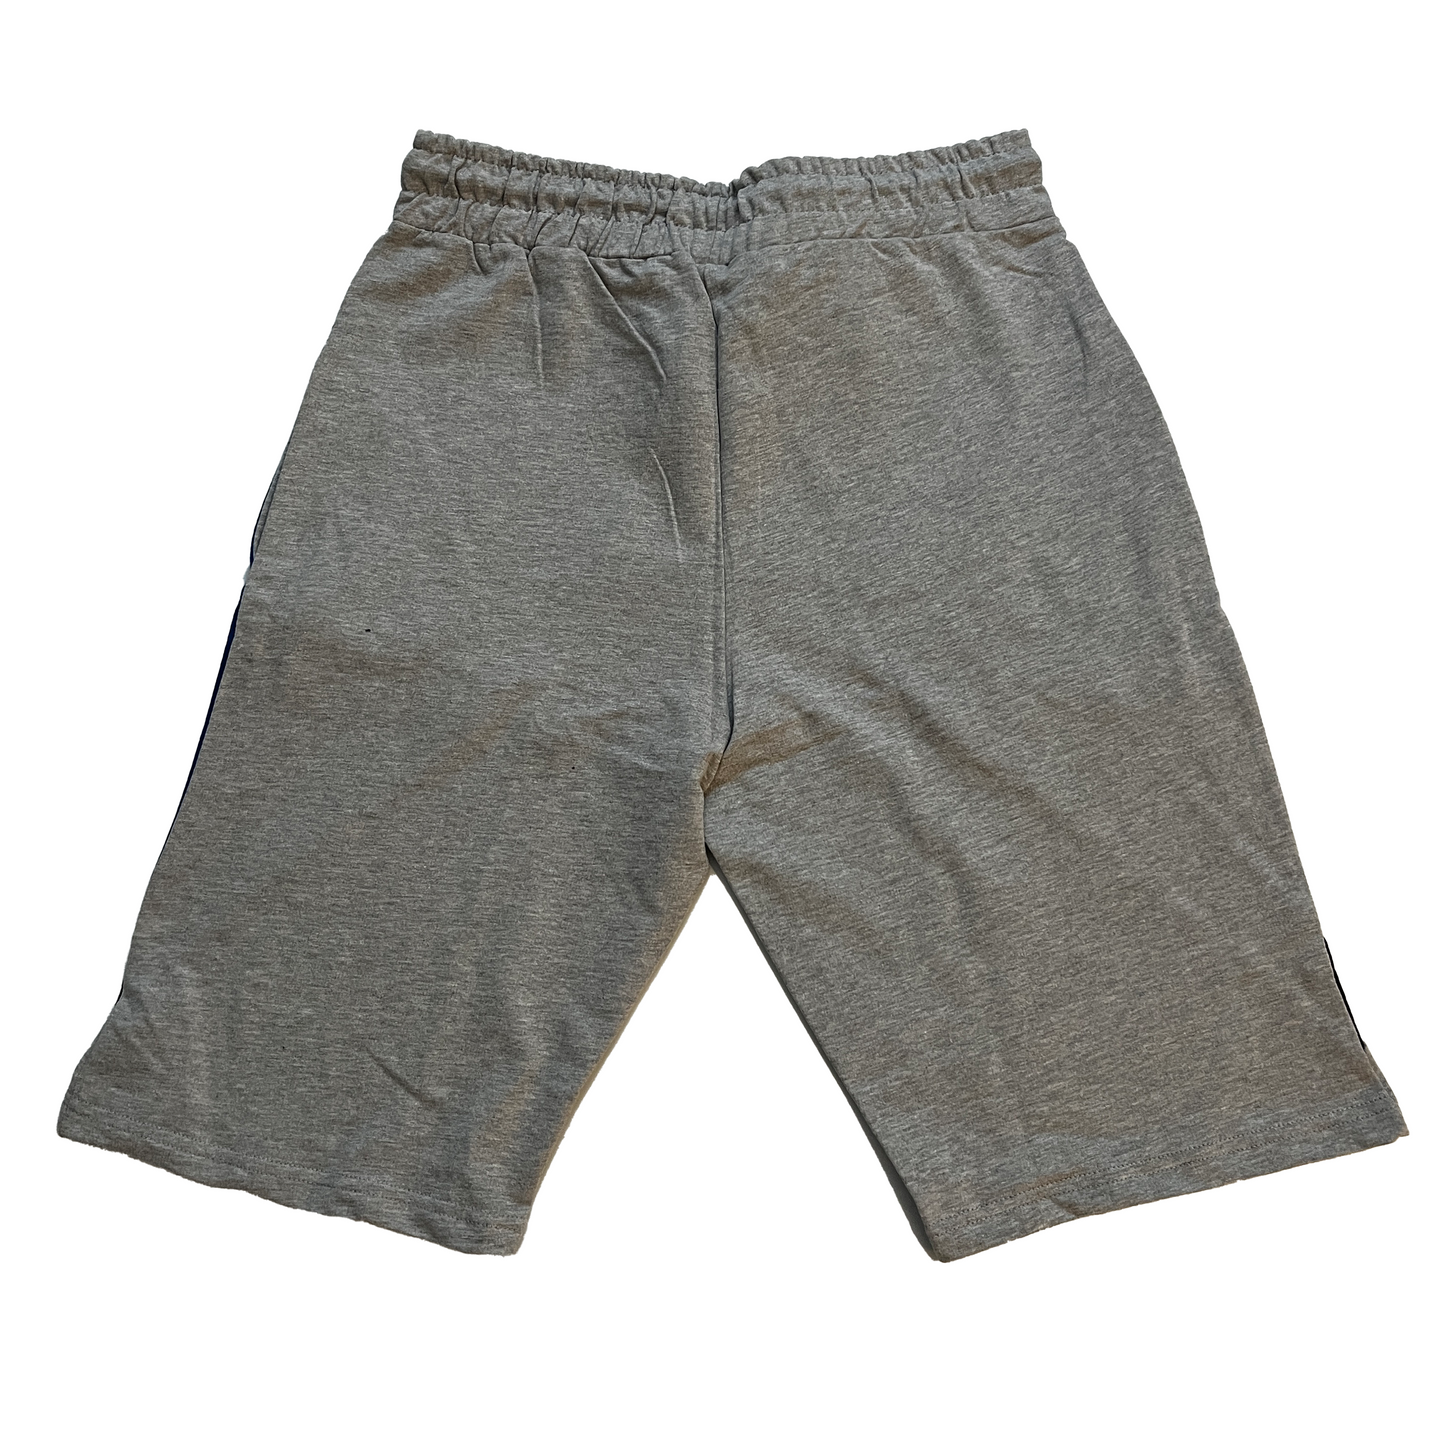 Berland Grey Shorts 2-Piece Set